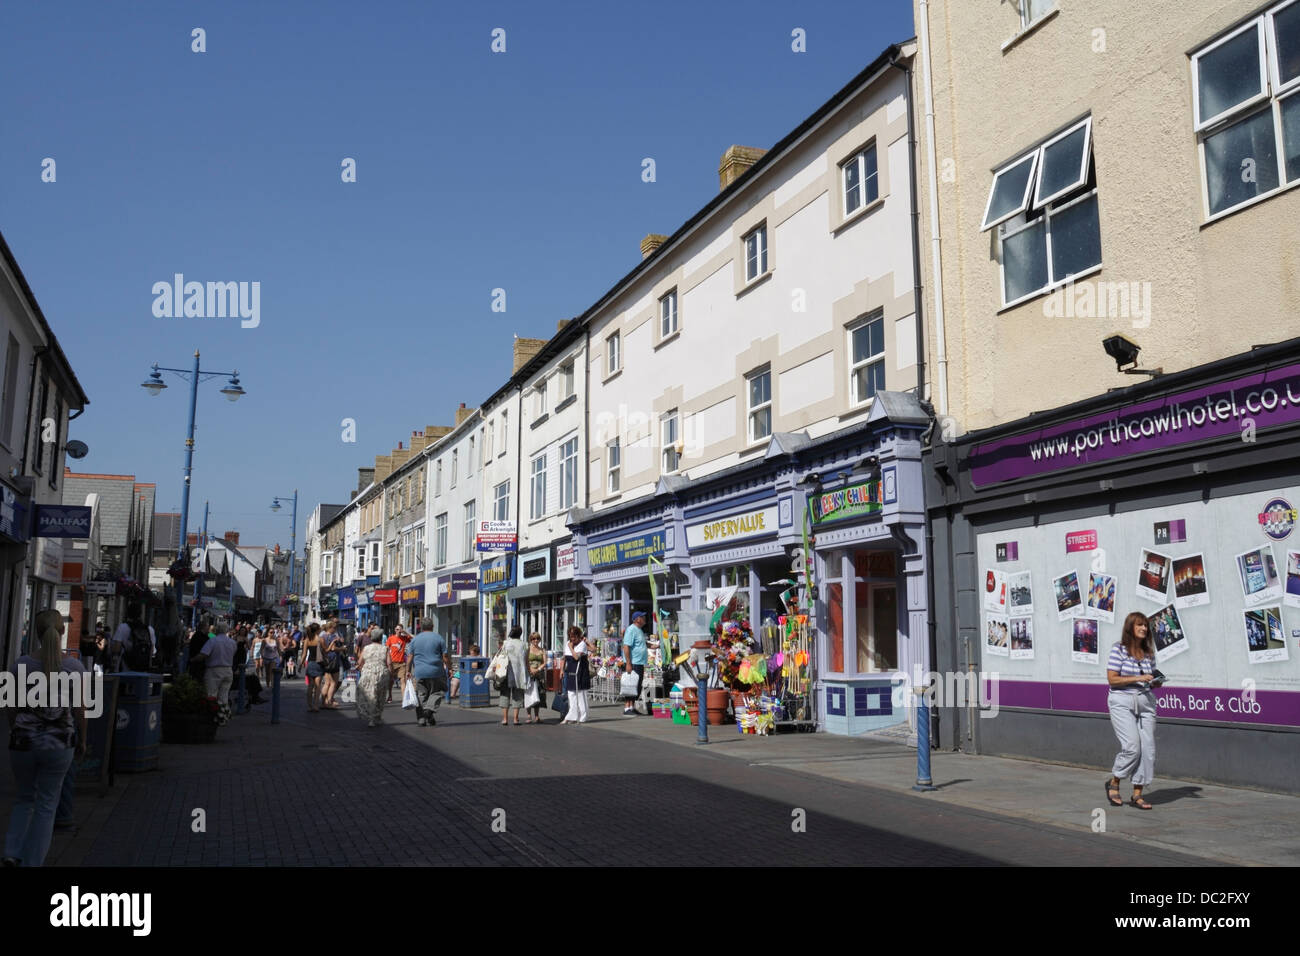 Pedestrian Shopping street in Porthcawl Wales Stock Photo